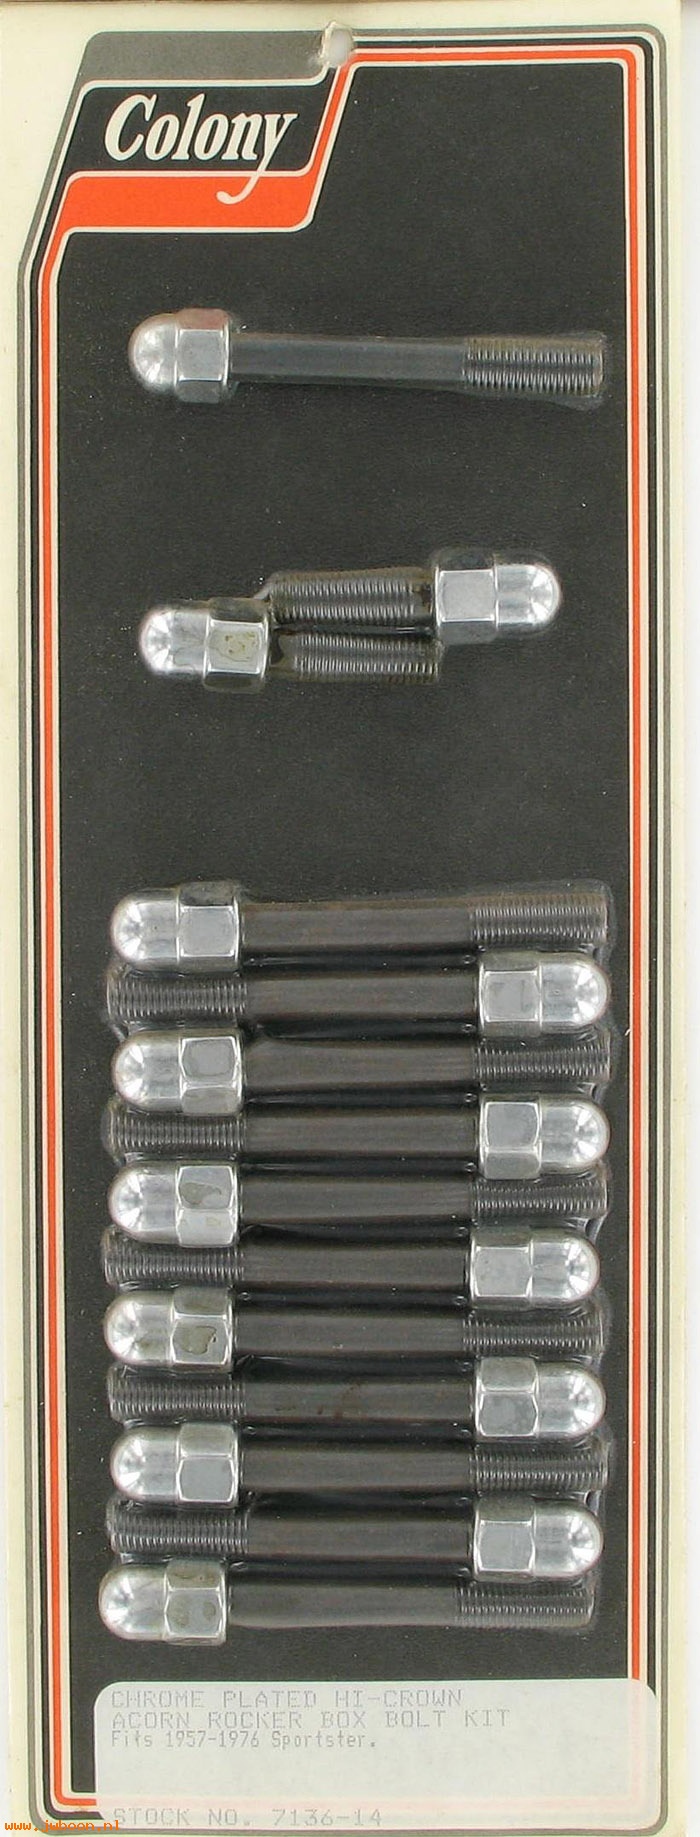 C 7136-14 (): Rocker box bolt kit - Ironhead Sportster XL's '57-'76, in stock